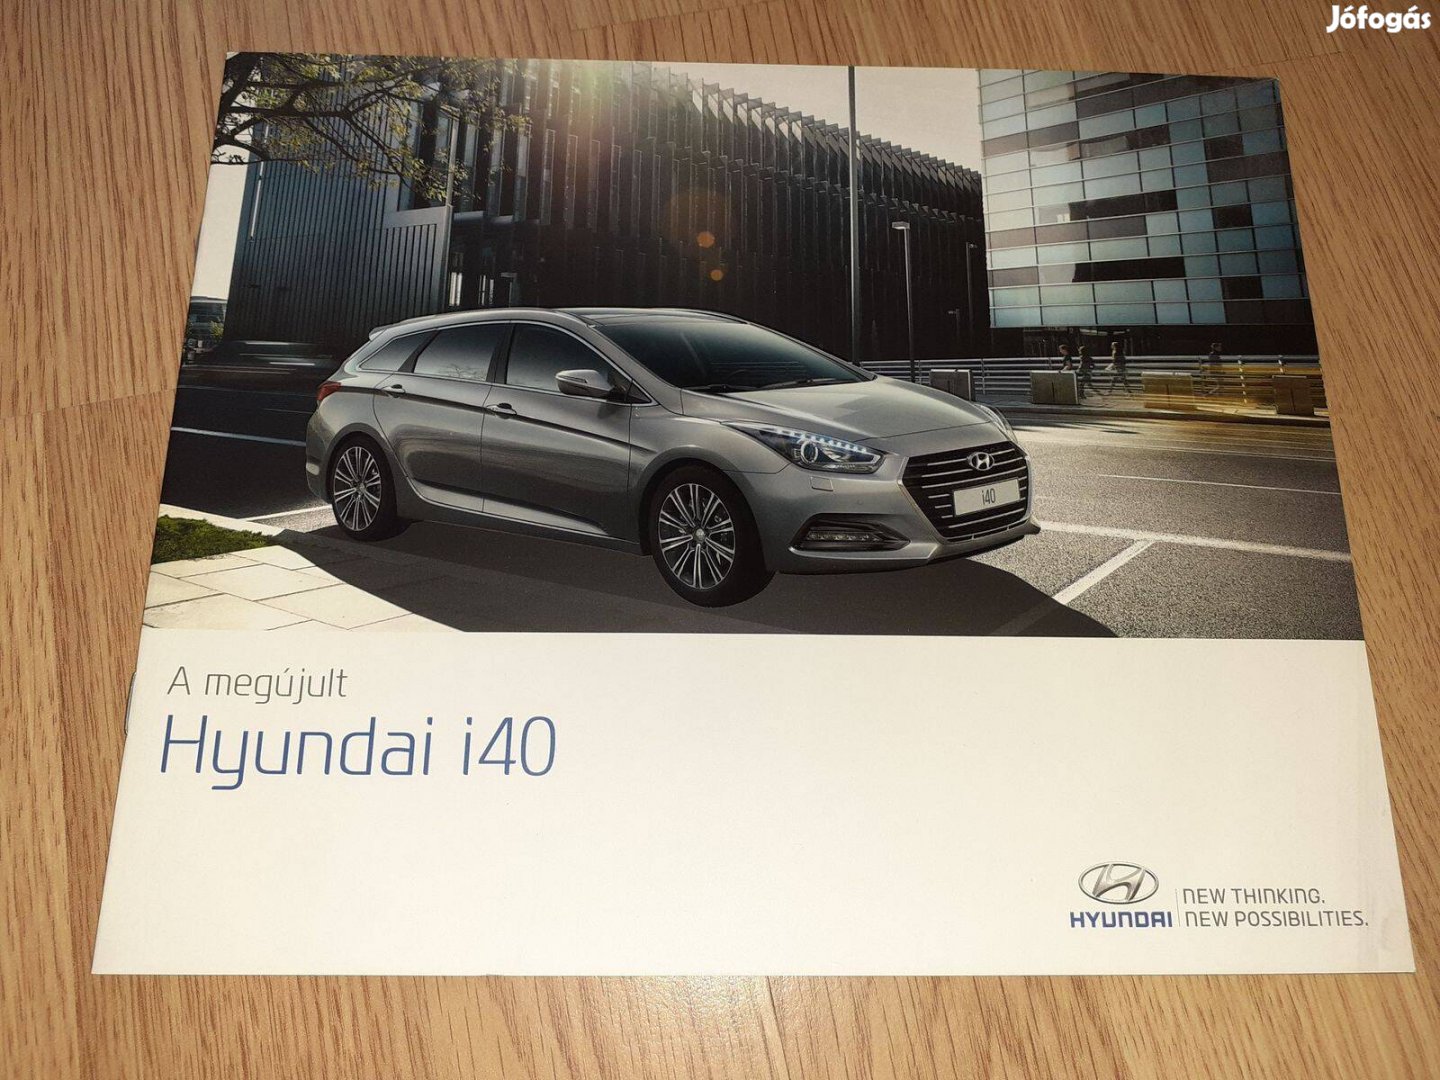 Hyundai i40 prospektus - 2015, magyar nyelvű